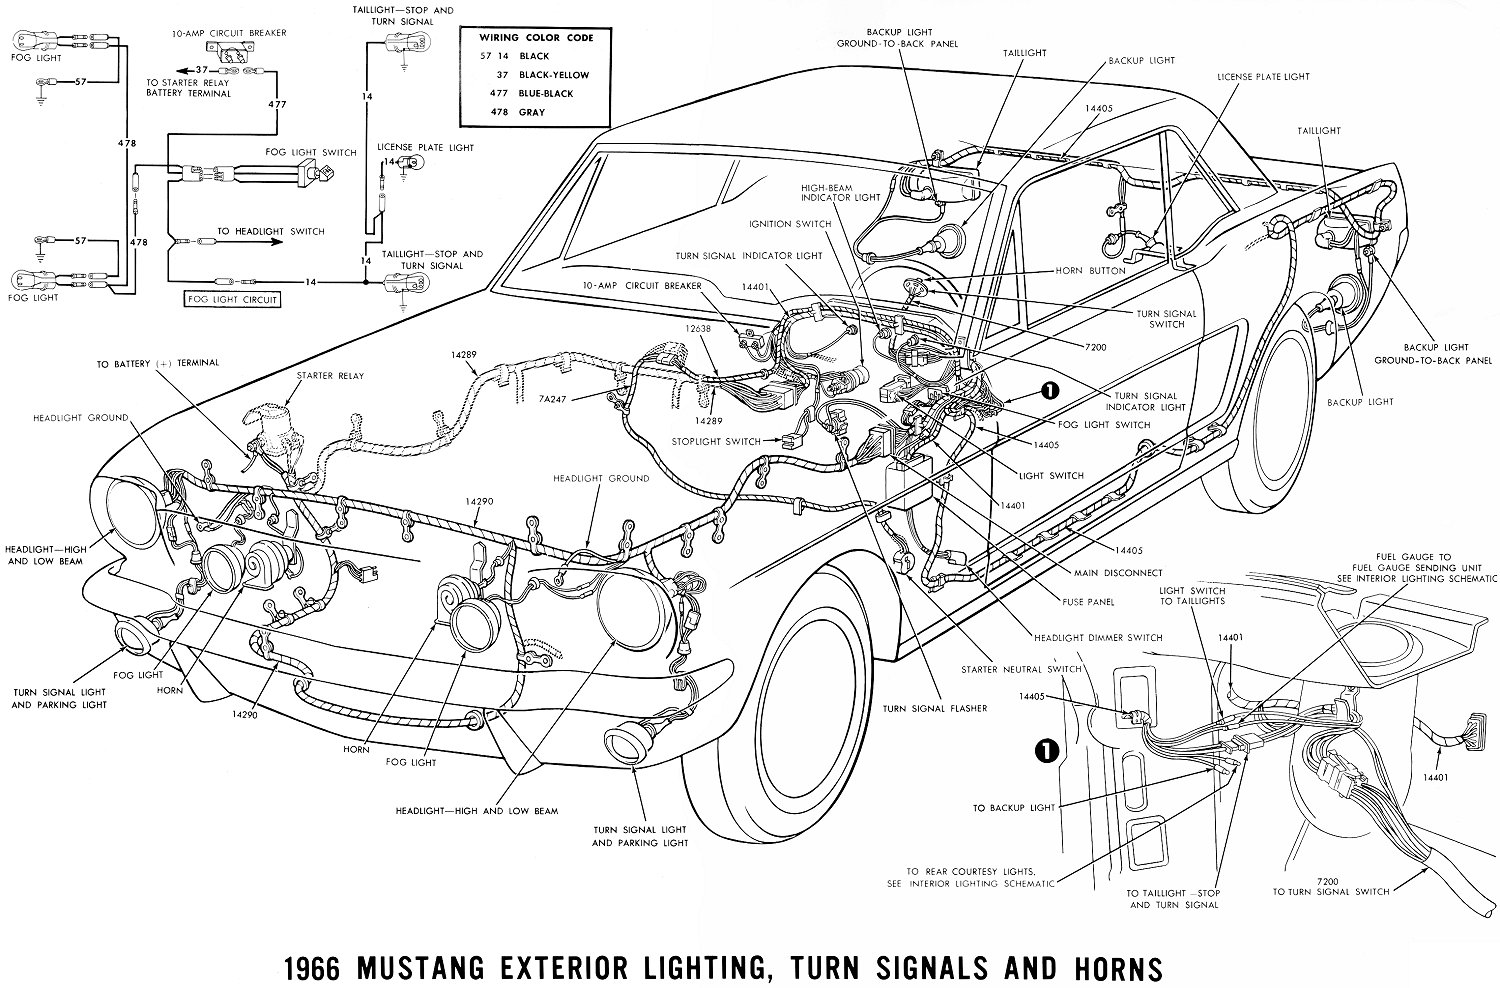 1965 Mustang Starter Solenoid Wiring Diagram from averagejoerestoration.com